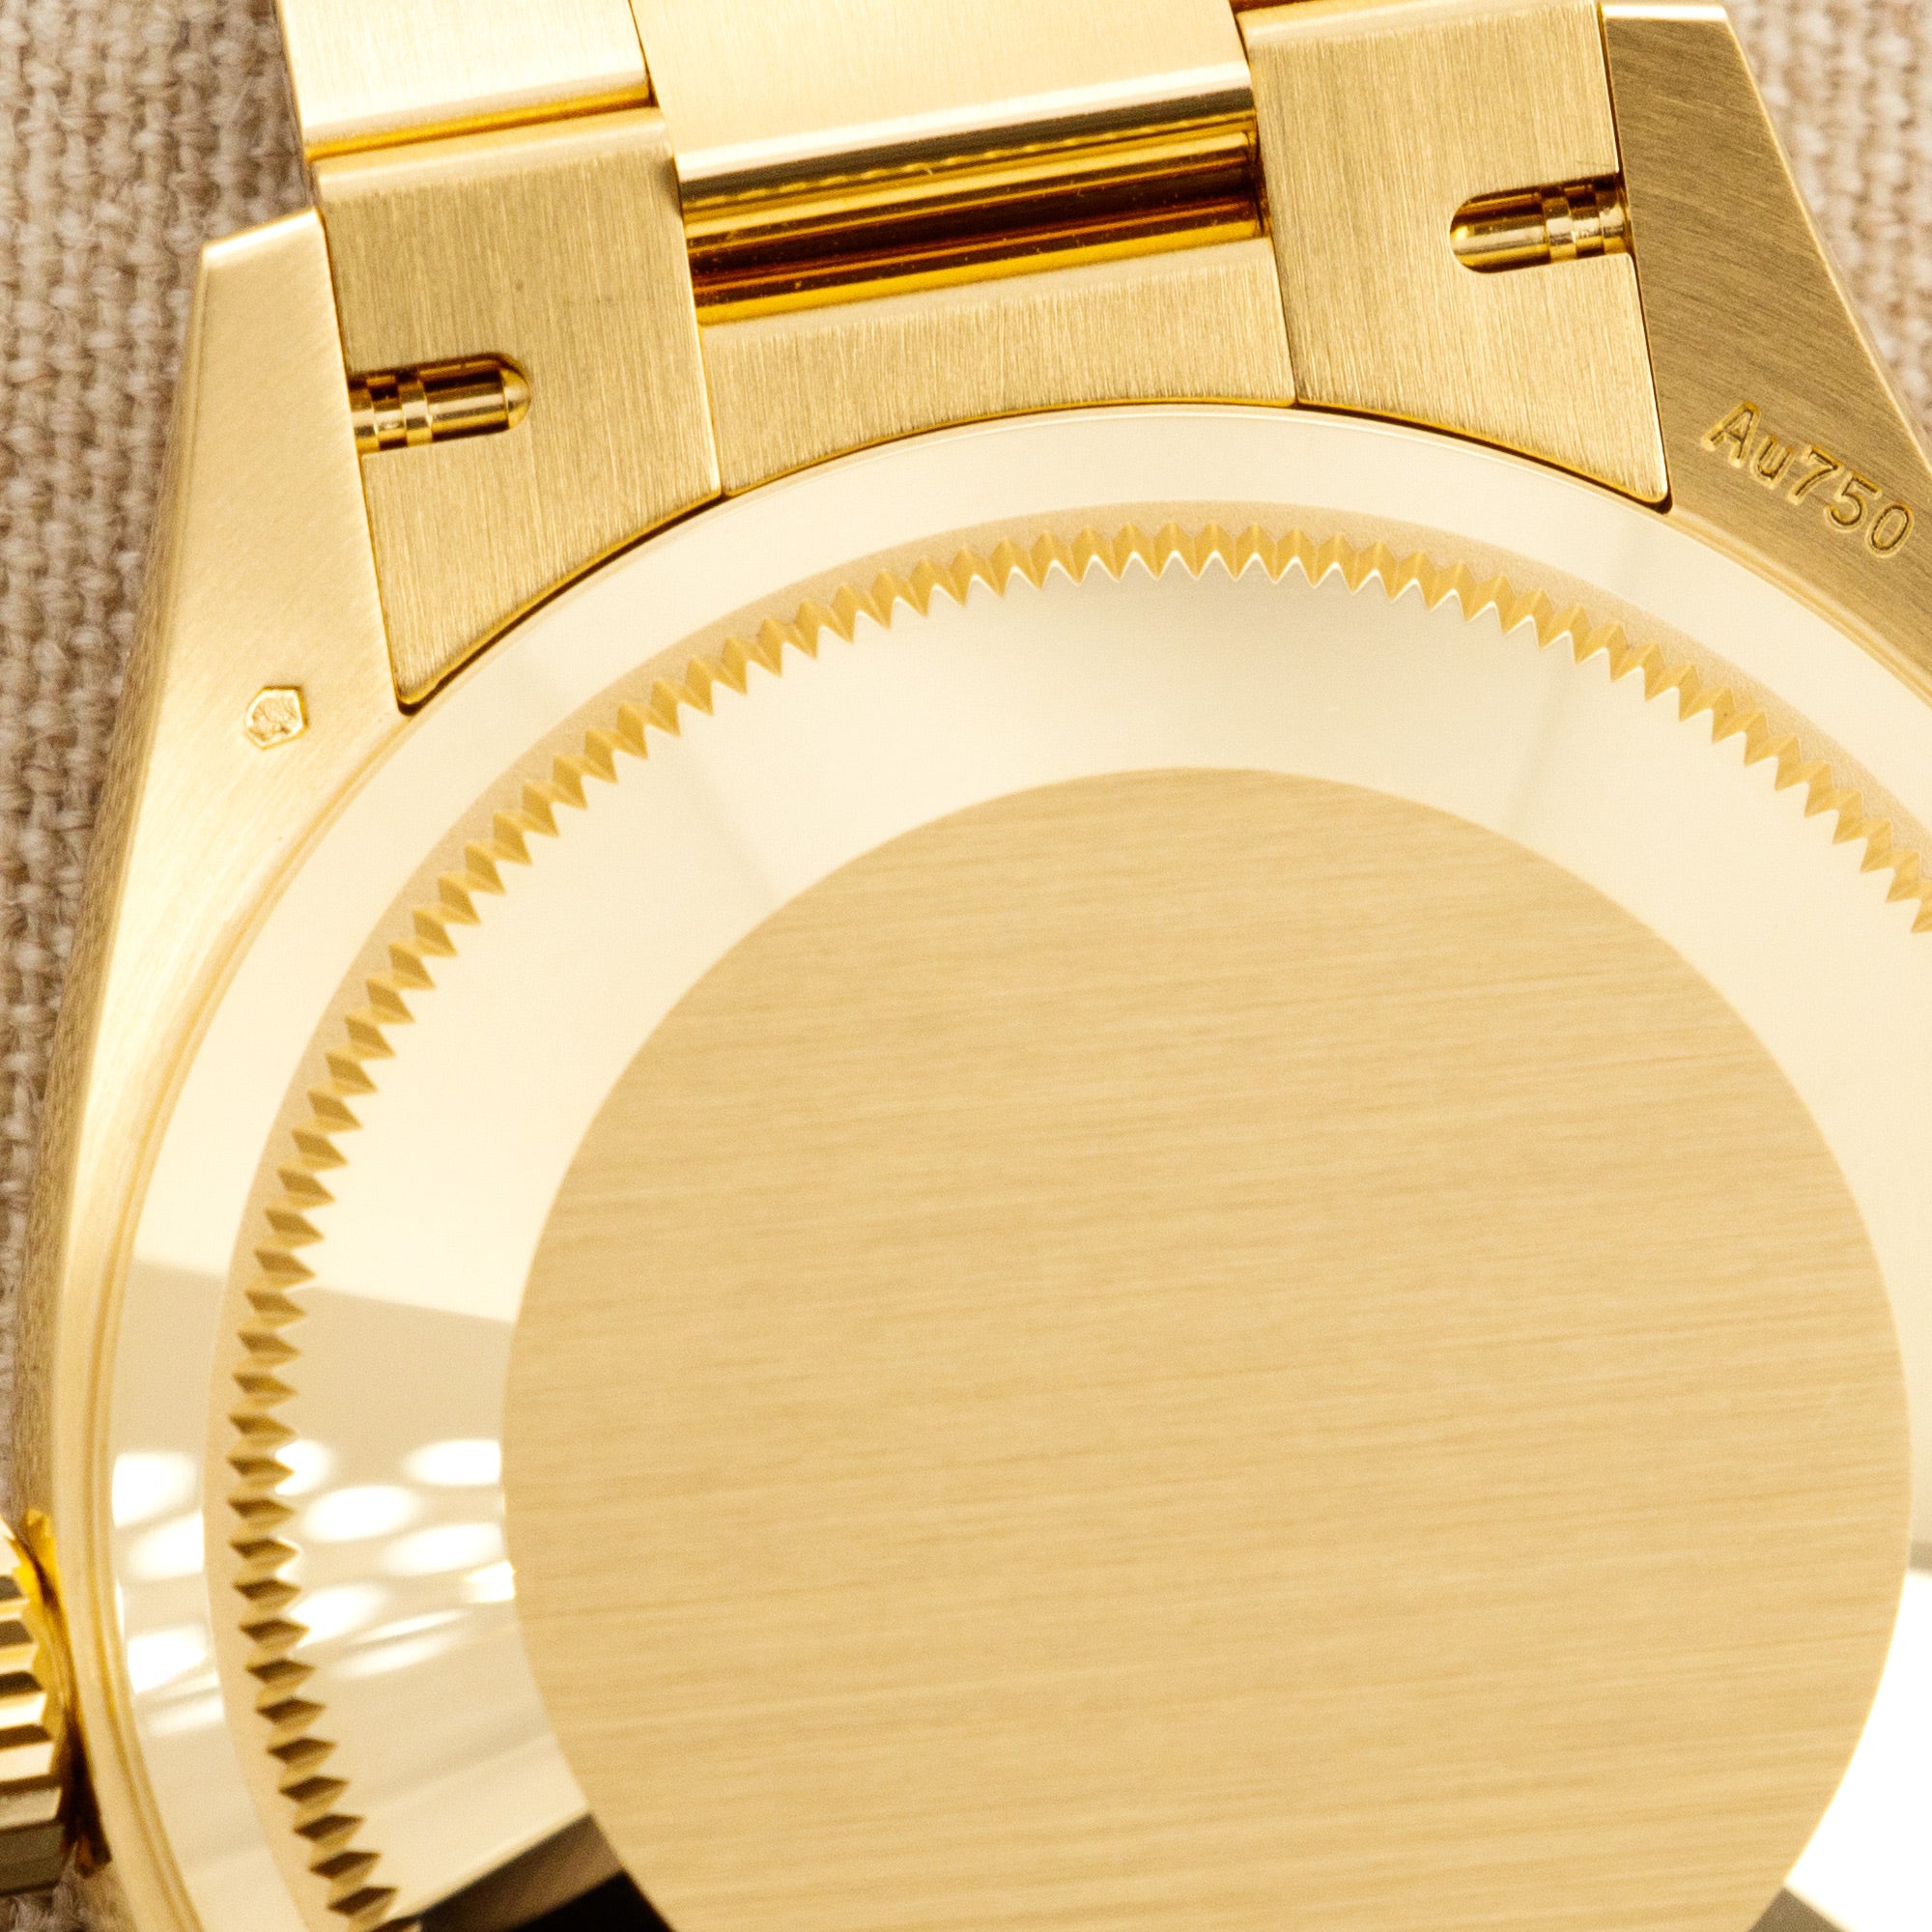 Rolex - Rolex Yellow Gold Day-Date Rainbow Watch Ref. 128238 - The Keystone Watches